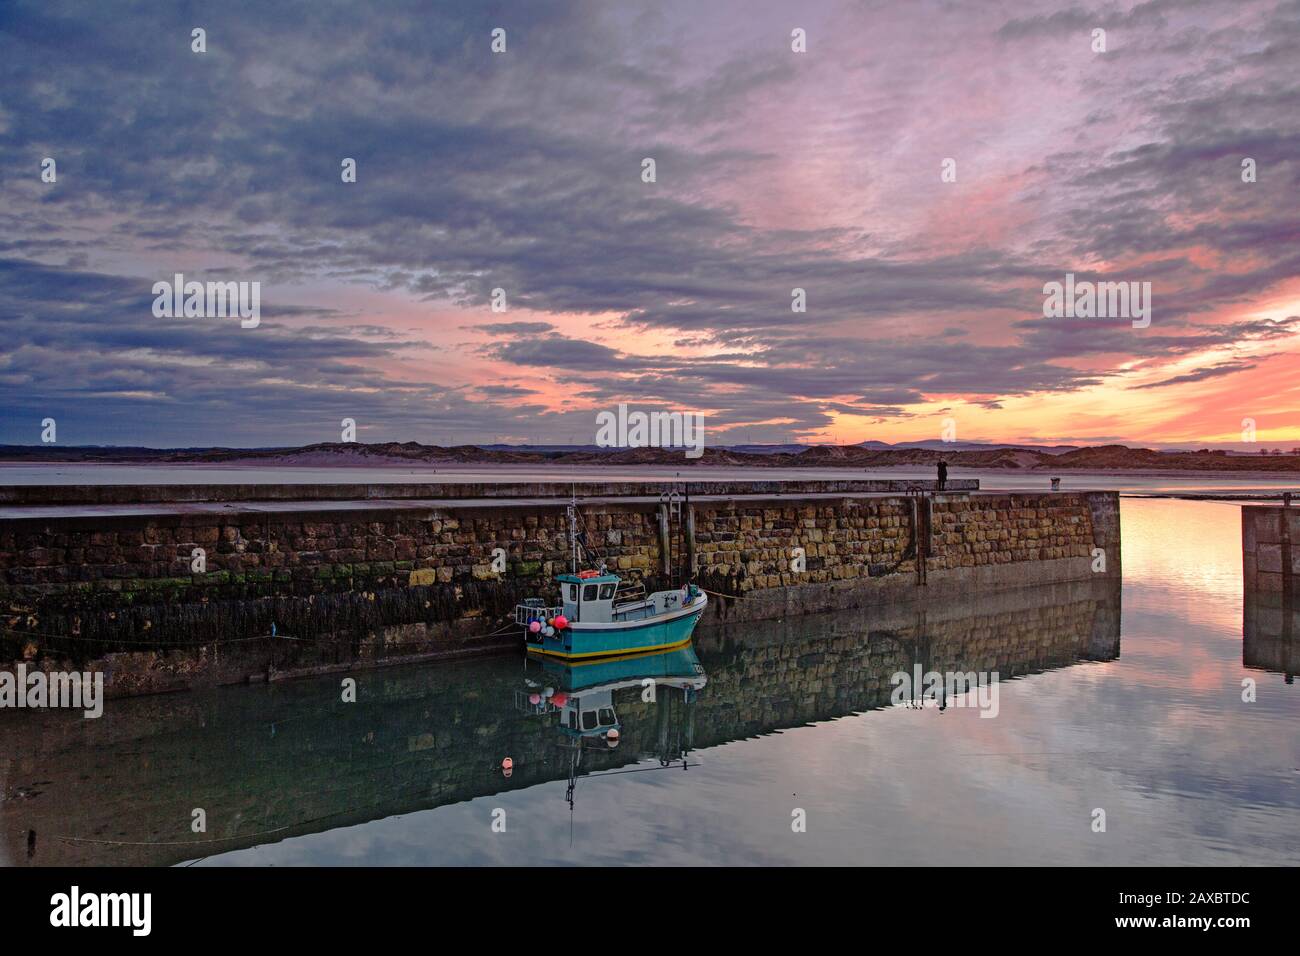 Fishing boot moored along jetty wall under dramatic sunrise sky Stock Photo